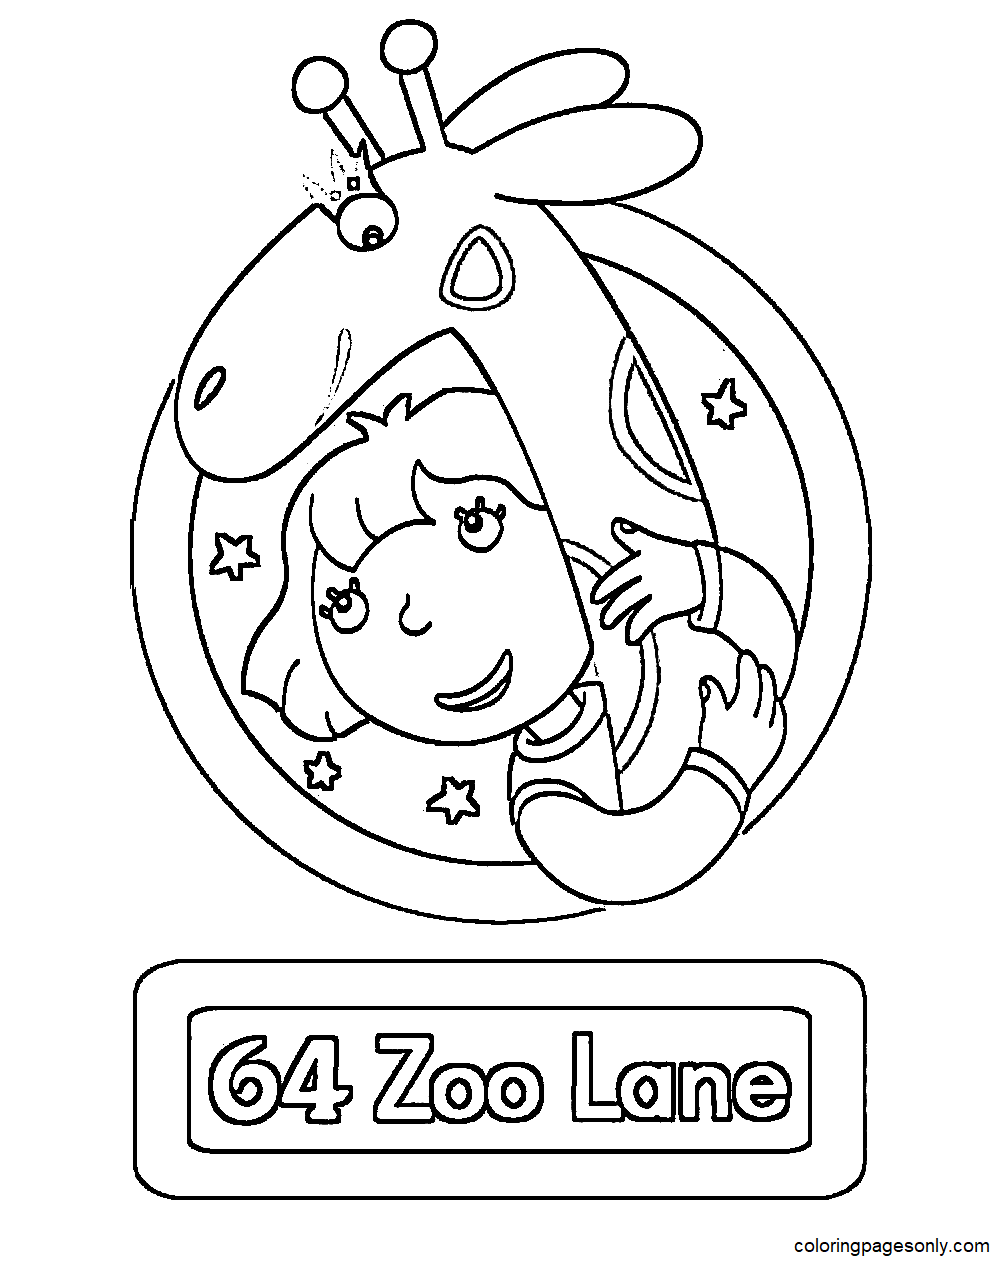 Free Printable 64 Zoo Lane Coloring Page